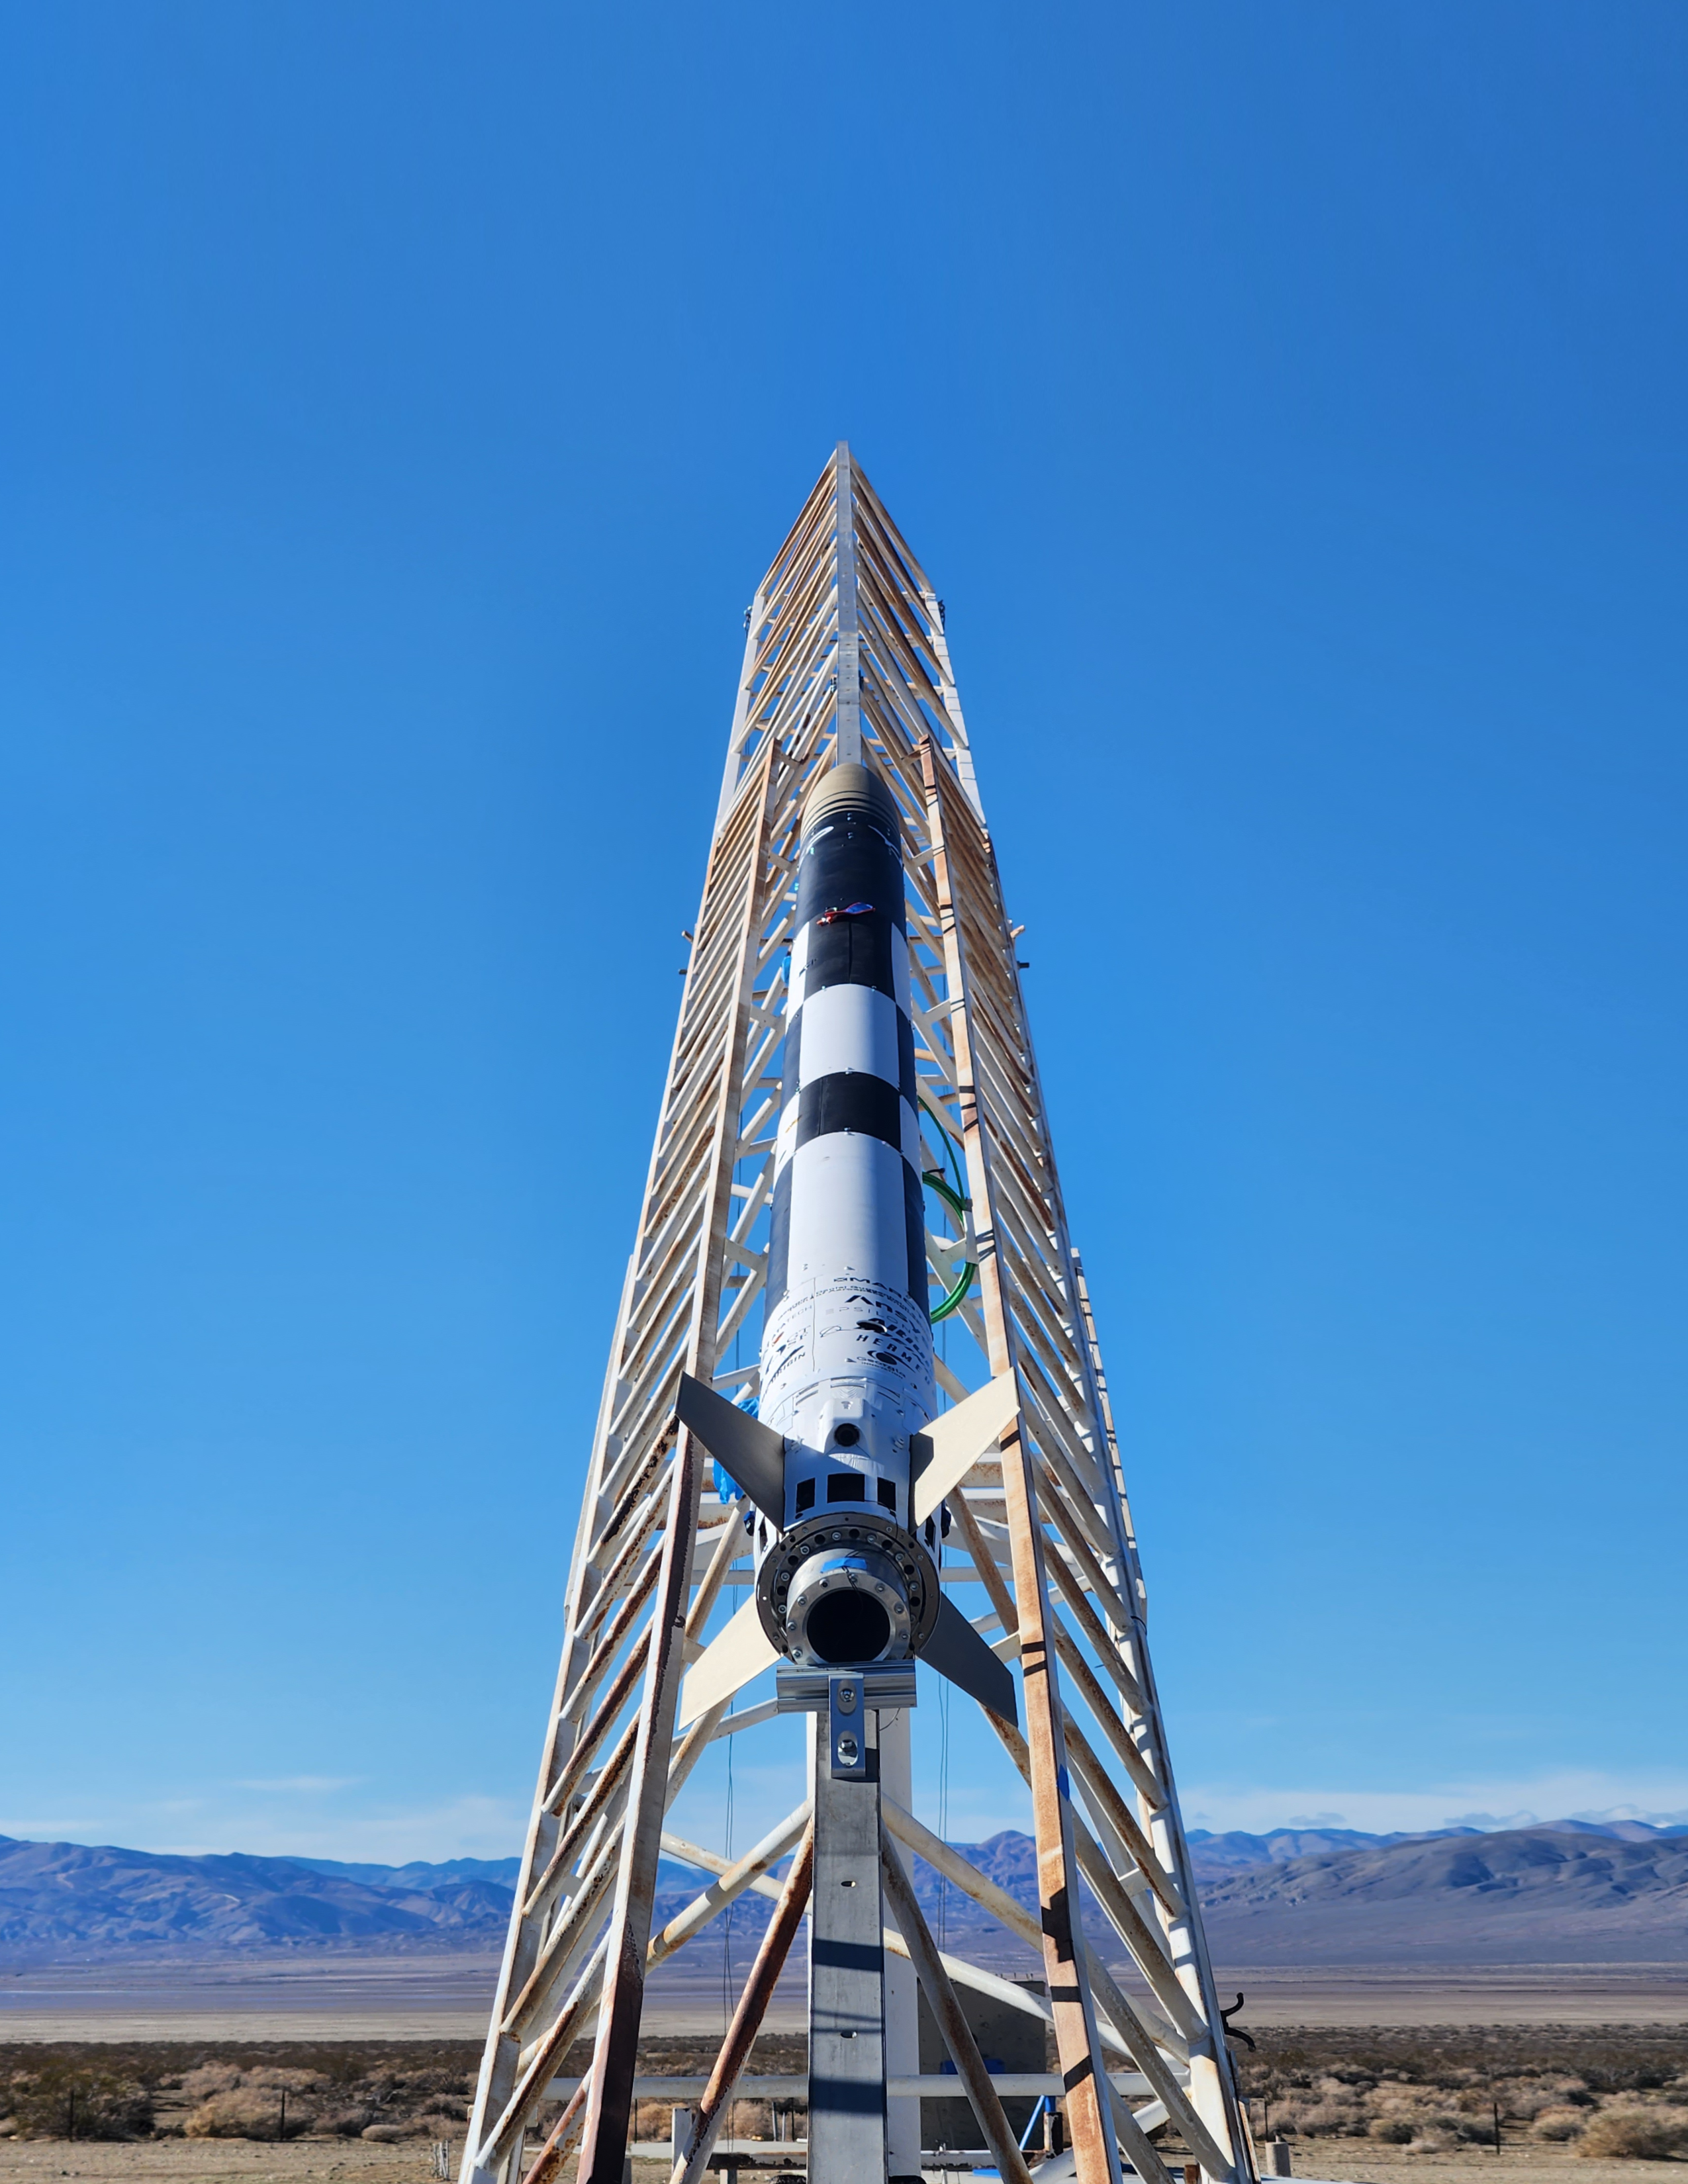 Rocket launch set up as part of Georgia Tech research